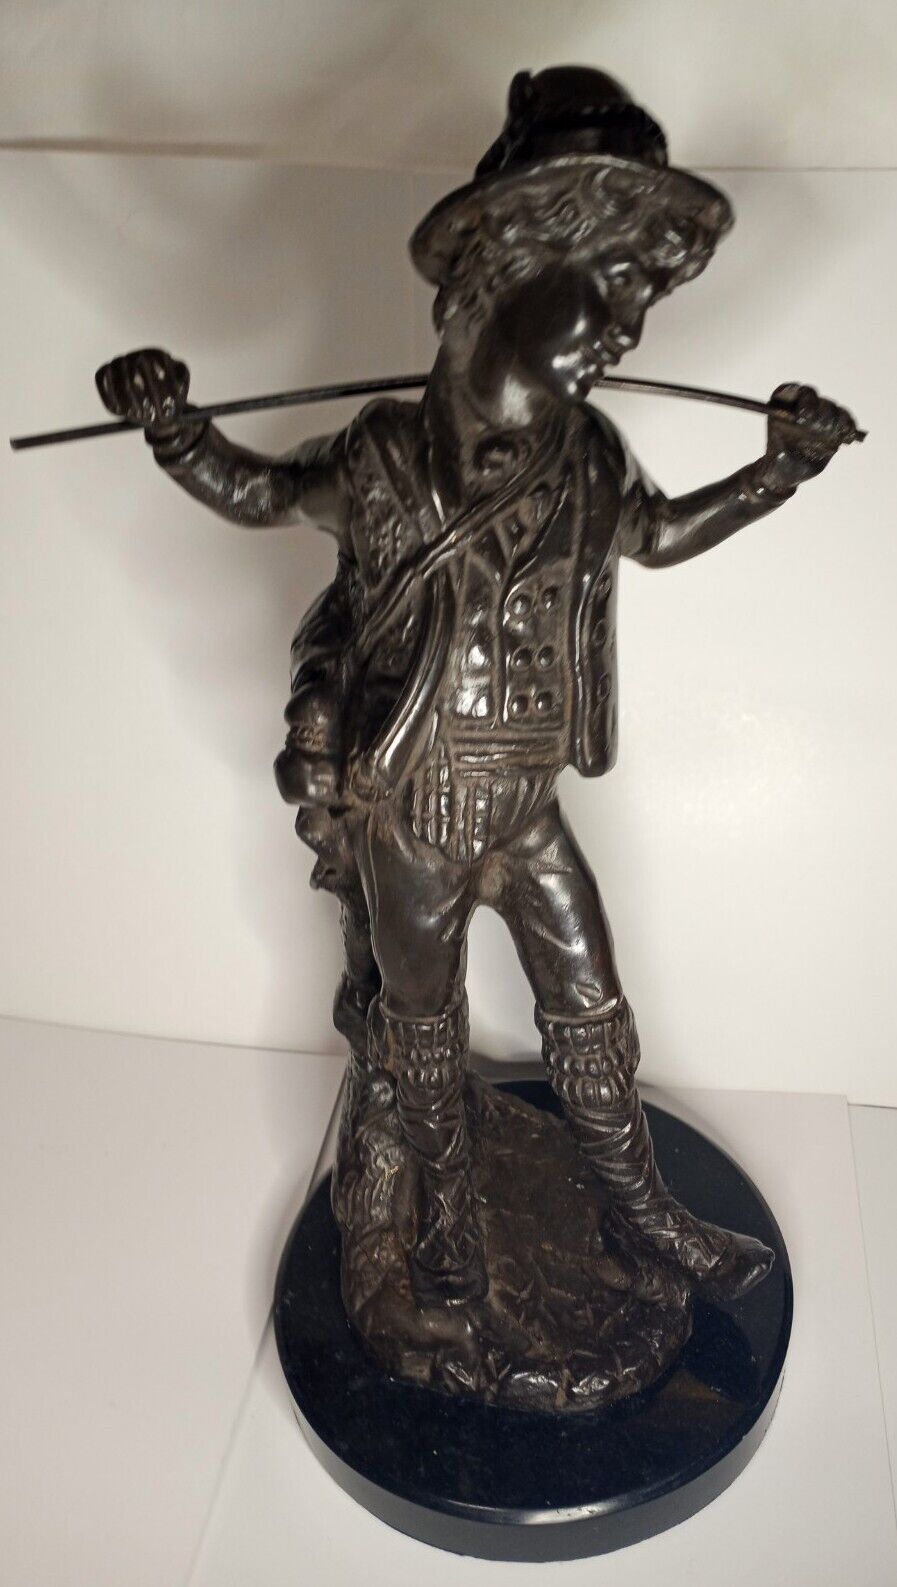 Vintage Bronze Statue Figurine Boy Huckleberry Finn 1800s grand tour souvenir?